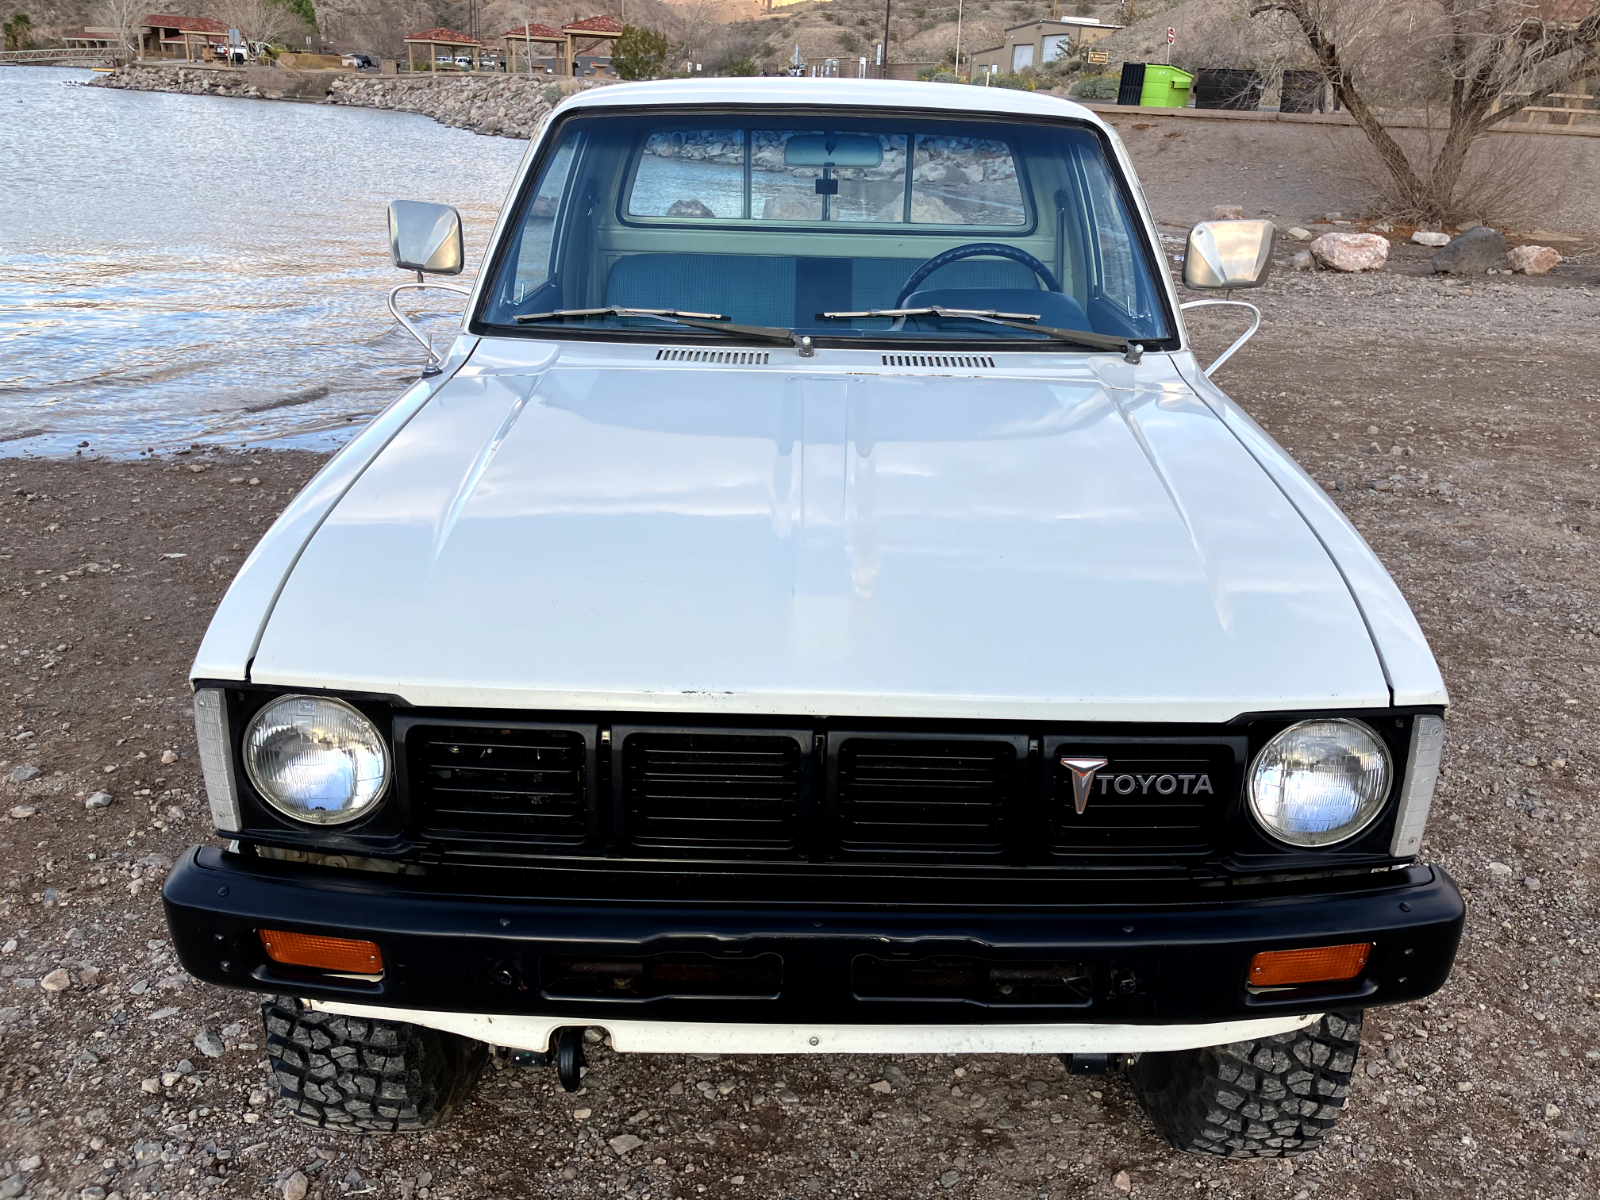 1981 Toyota 4X4 SHORTBED 47K ORIGINAL MILES